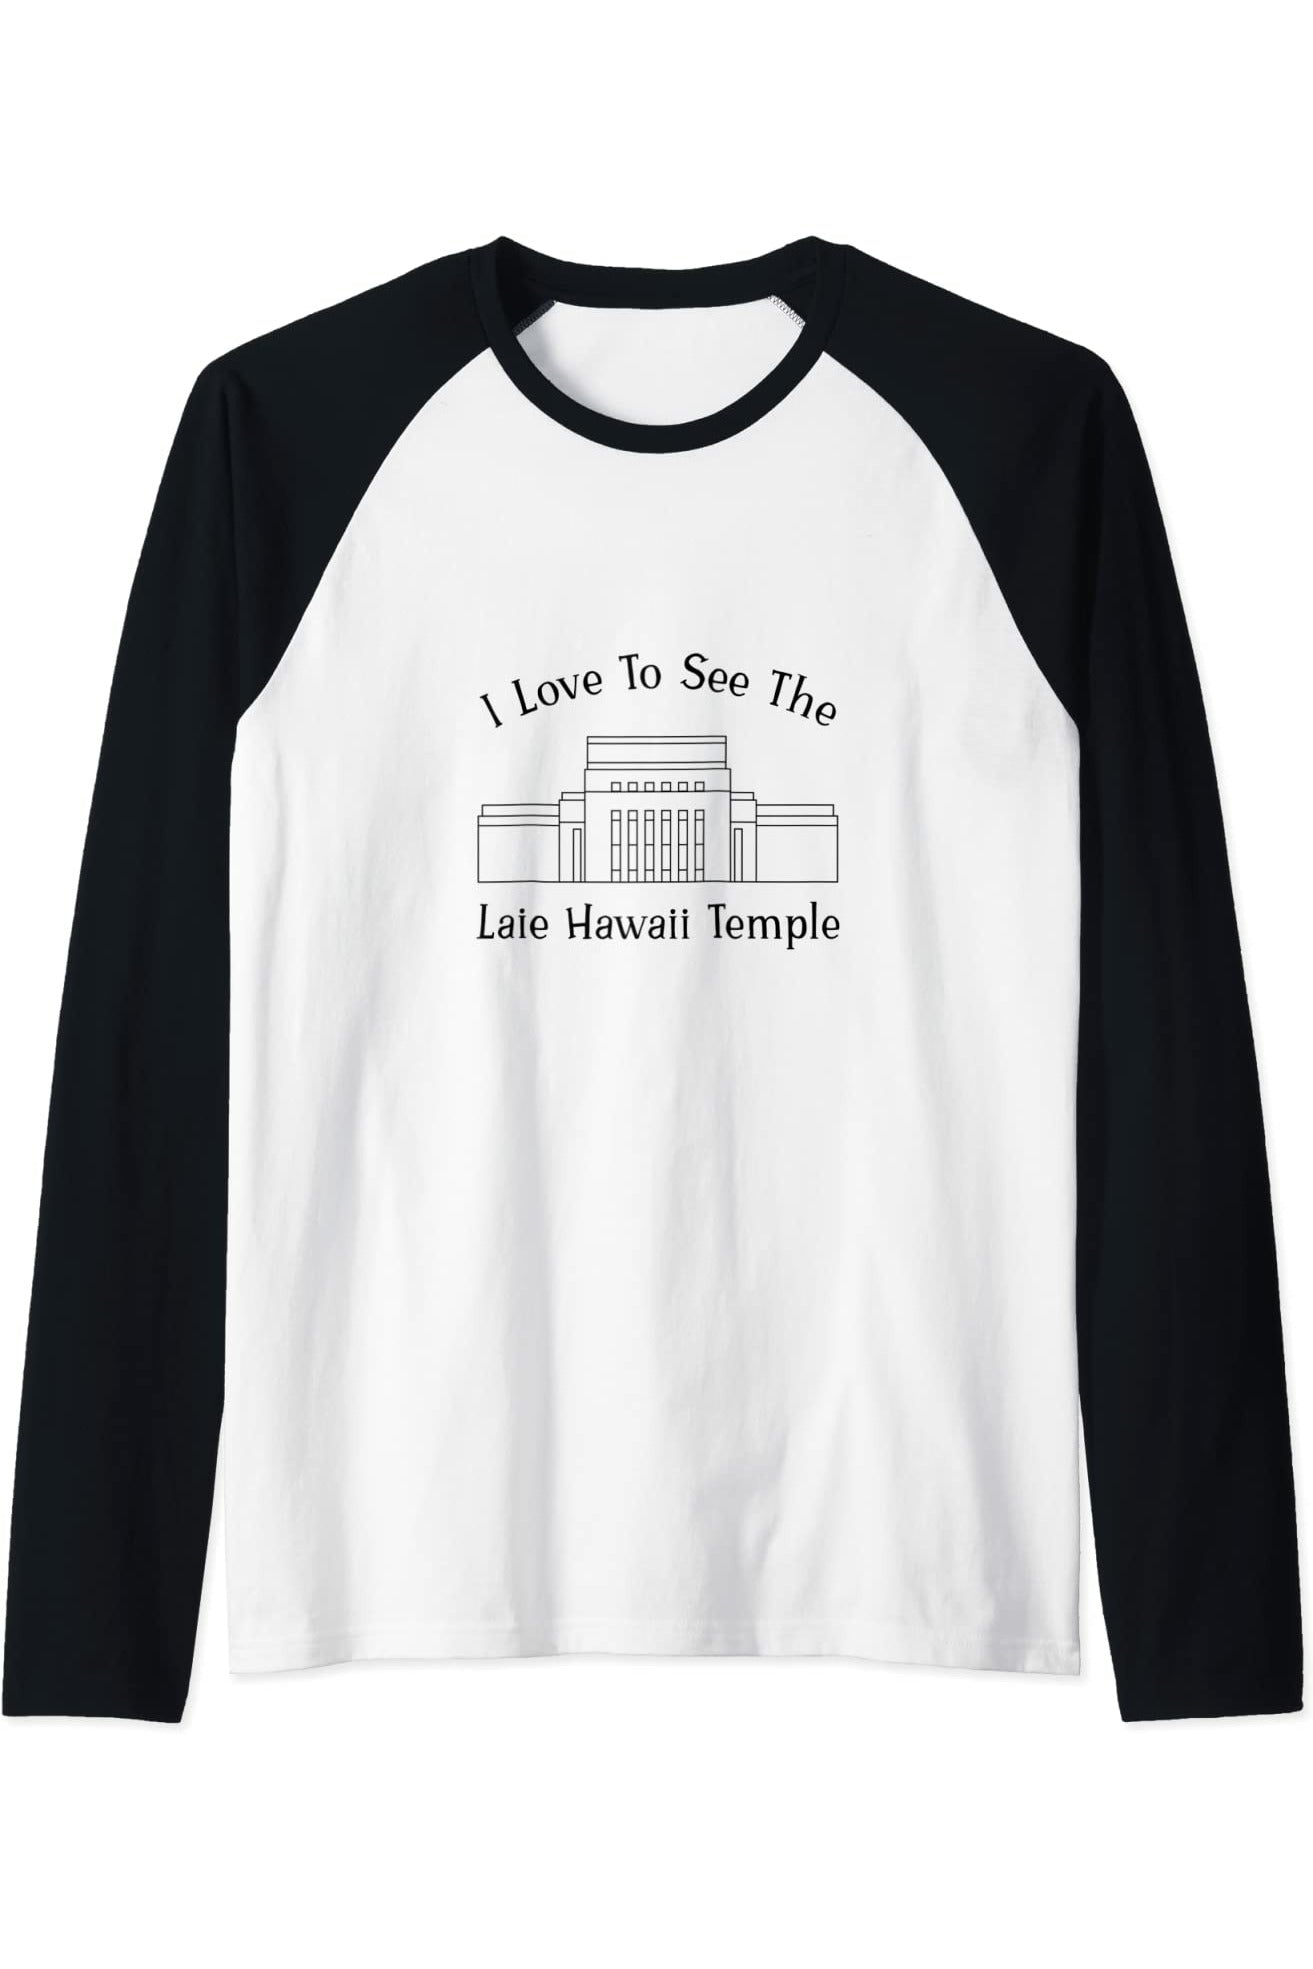 Laie Hawaii Temple Raglan - Happy Style (English) US